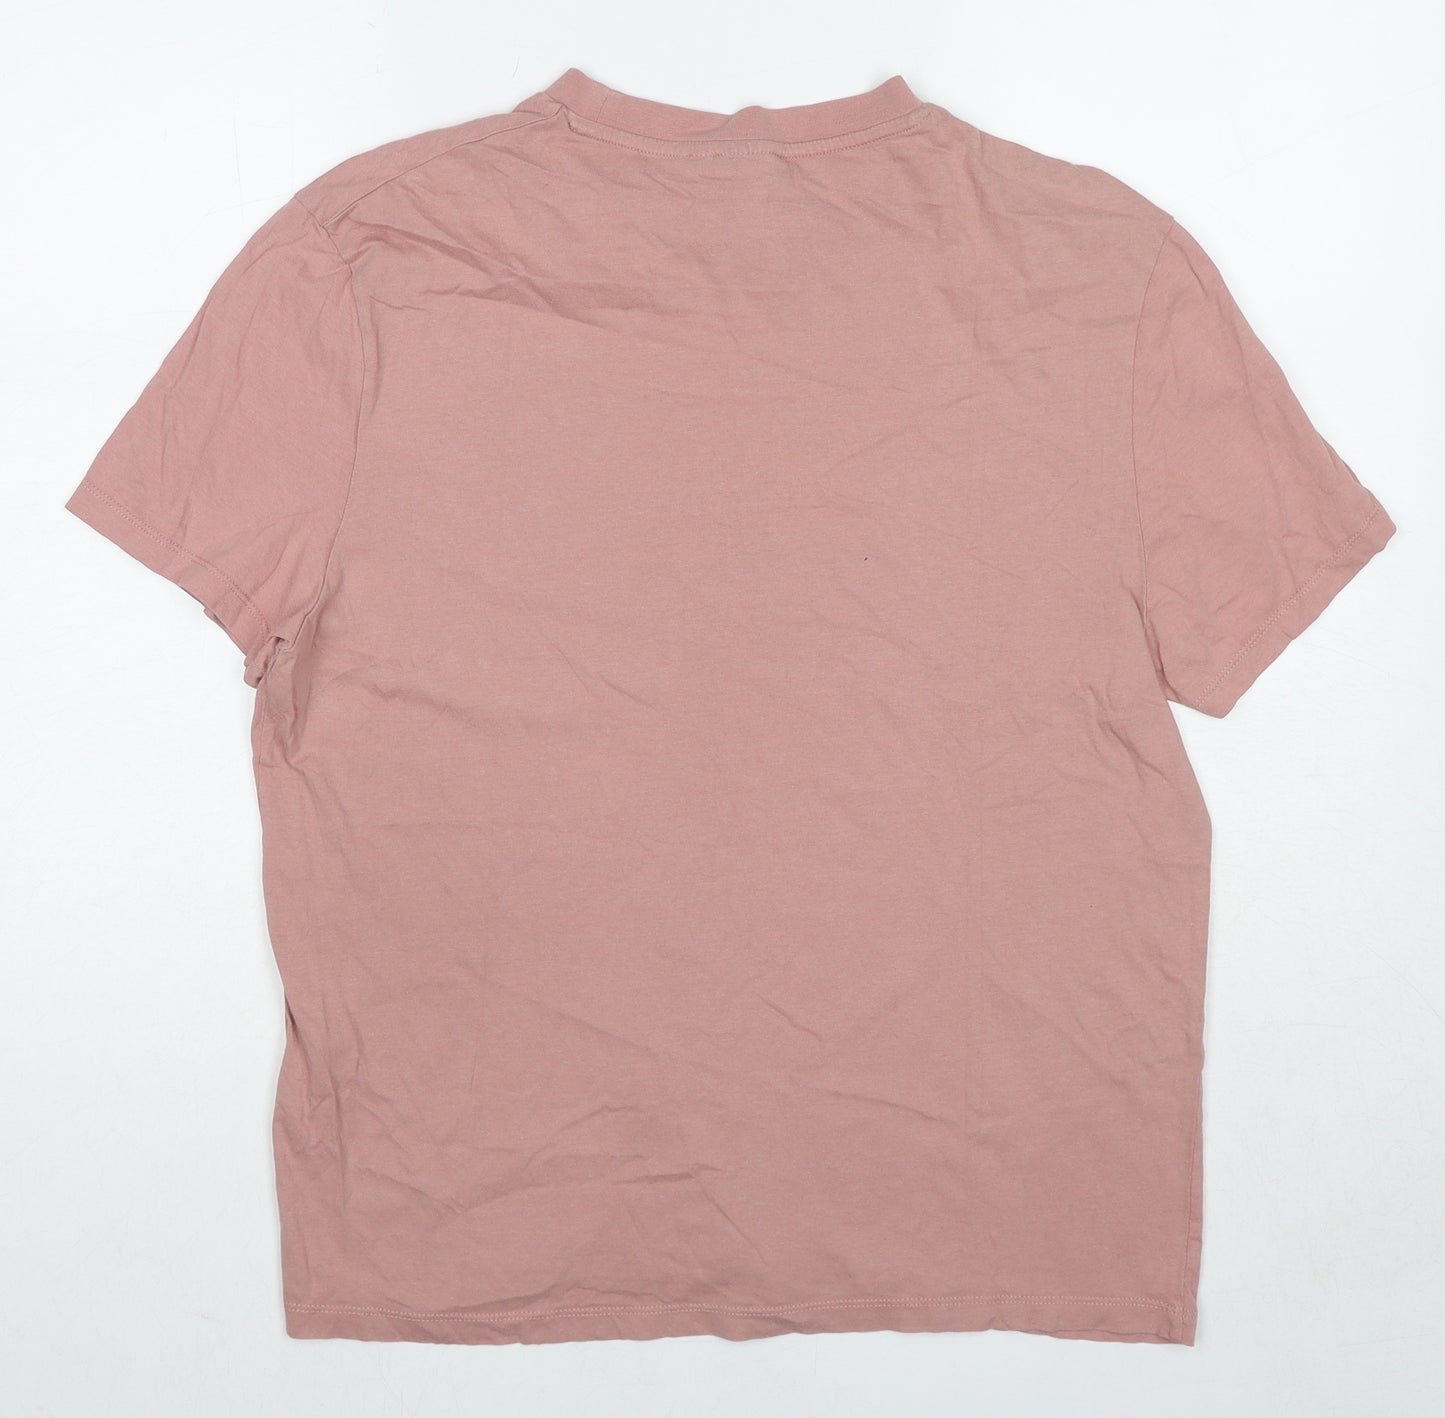 ASOS Womens Beige Cotton Basic T-Shirt Size L Round Neck